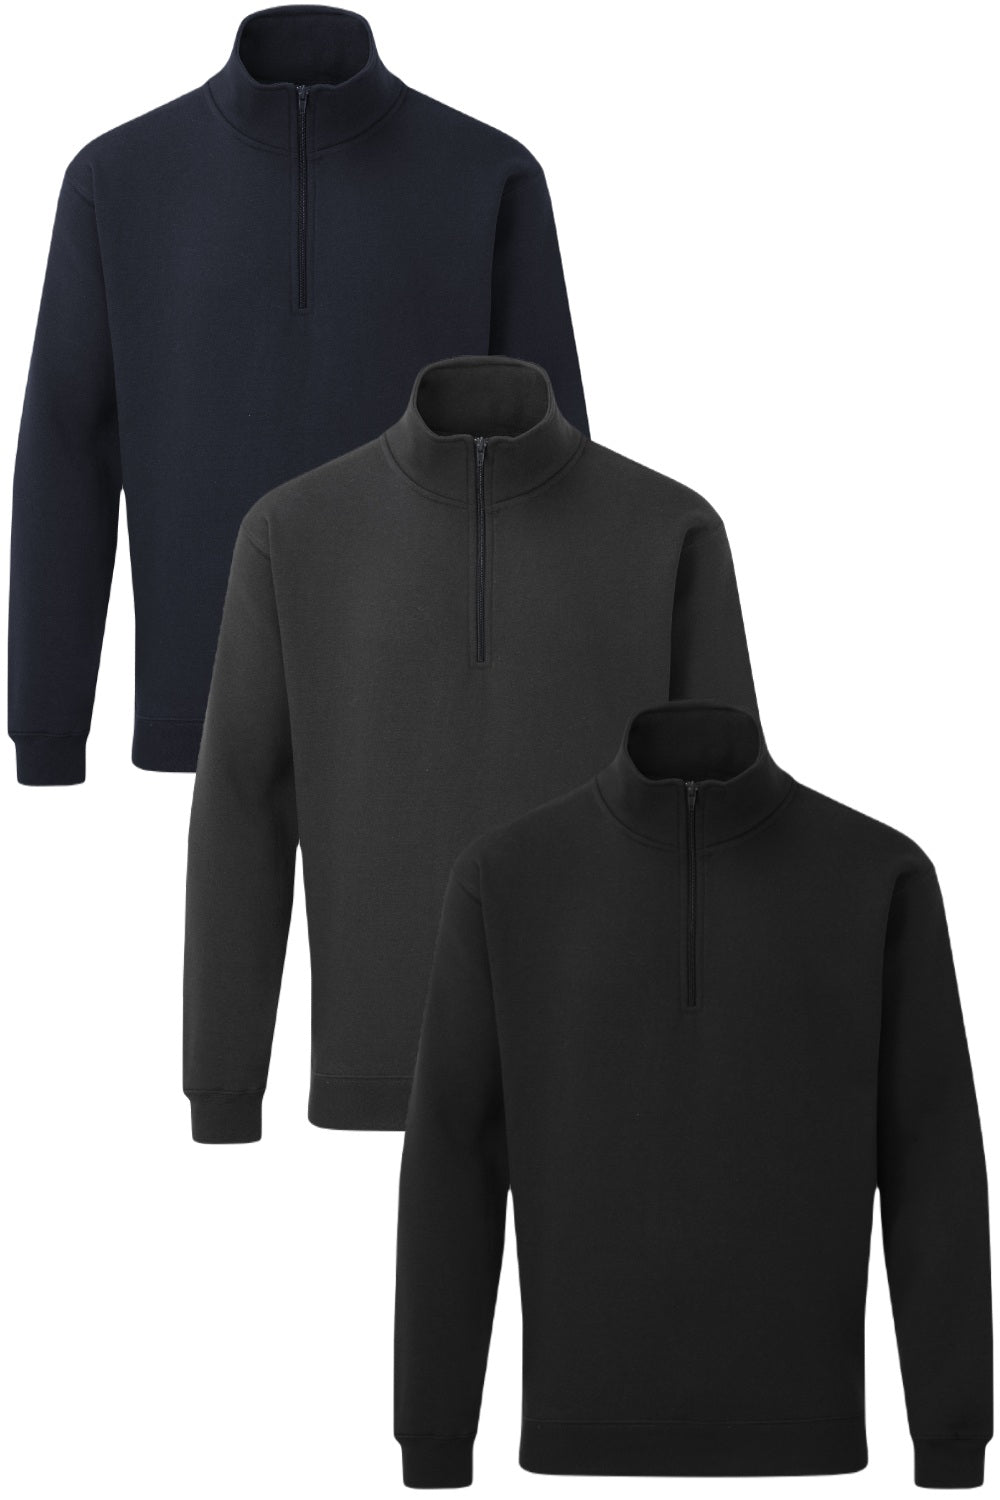 Fort Workforce 1/4 zip Sweatshirt in Black, Grey, Navy Blue